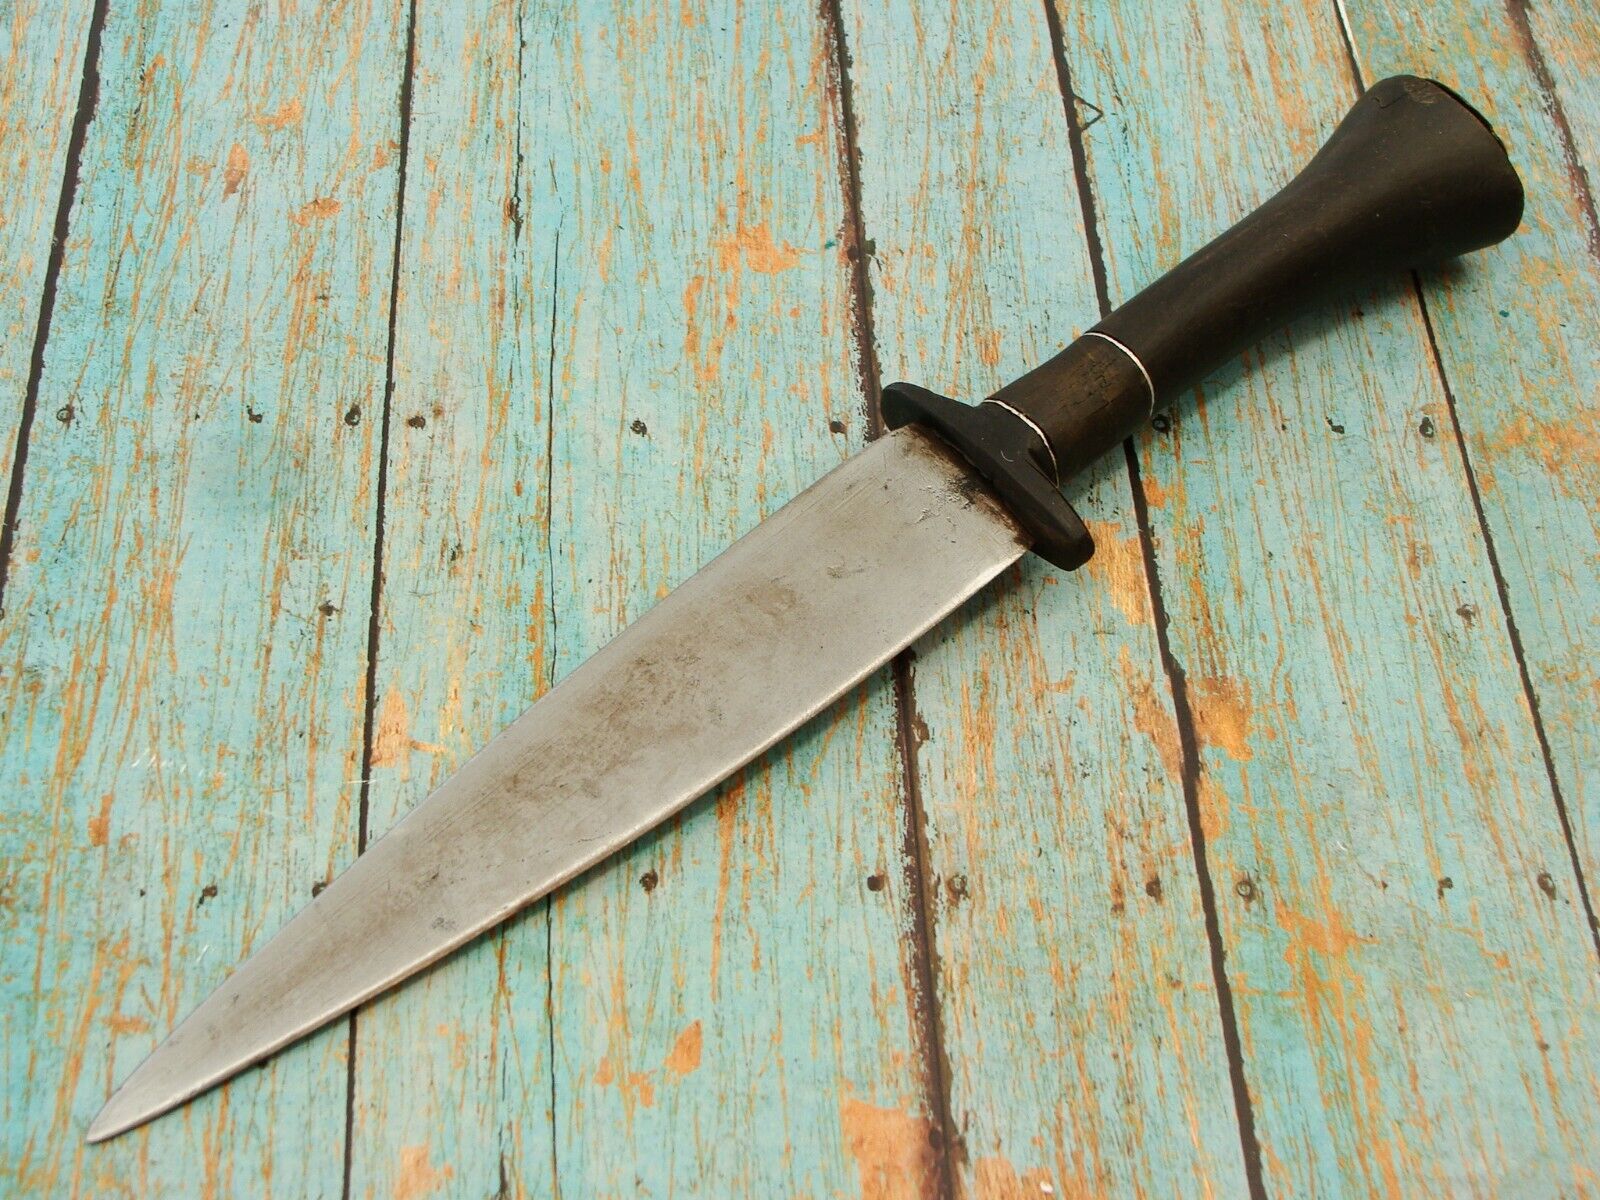 ANTIQUE EBONY AFRICA COMBAT FIGHTING DIRK DAGGER KNIFE KNIVES TOOLS